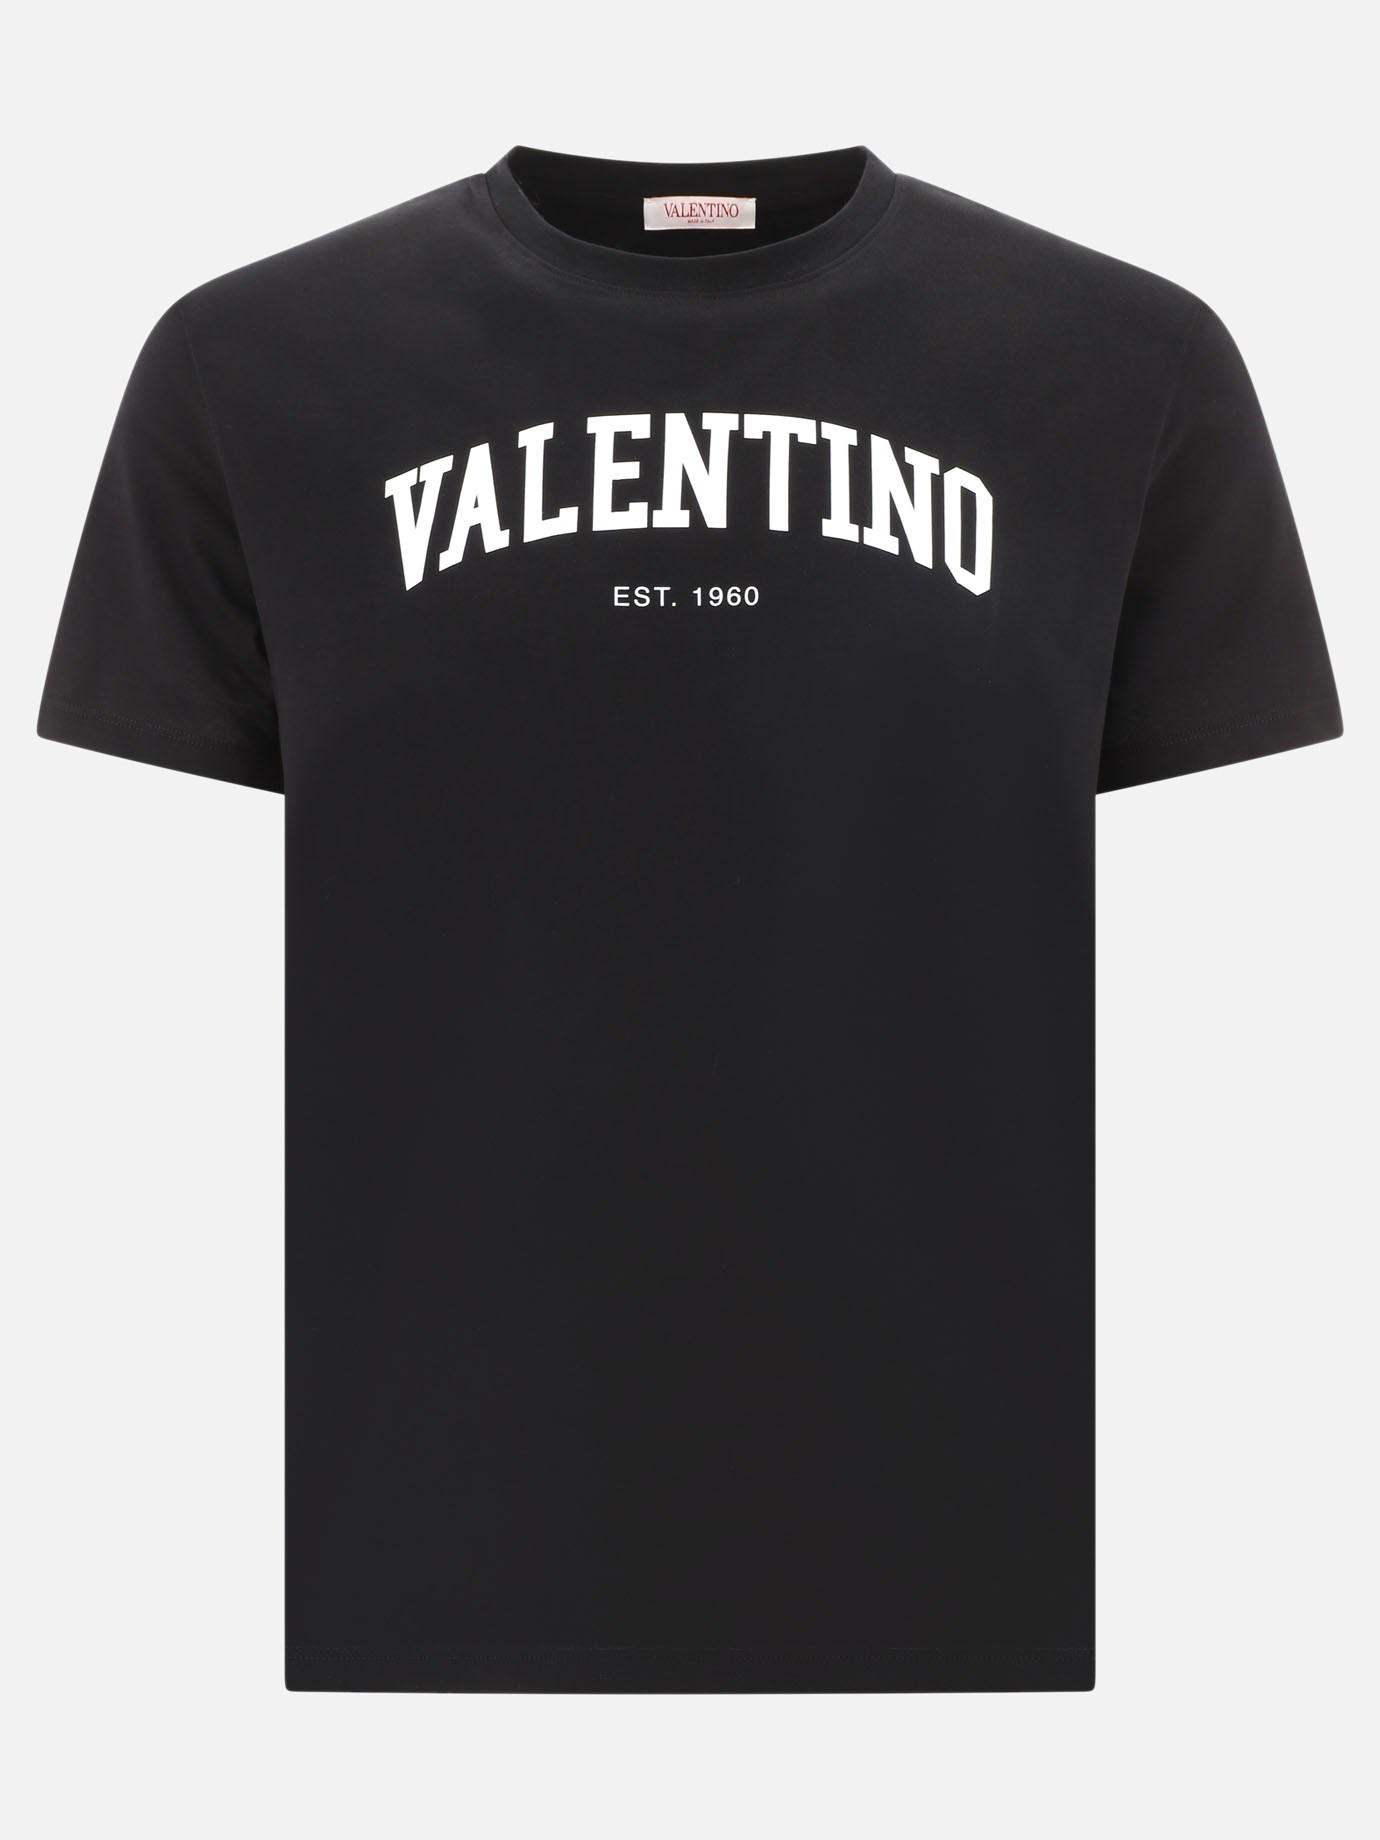 T-shirt  Valentino Est. 1960 by Valentino - 1